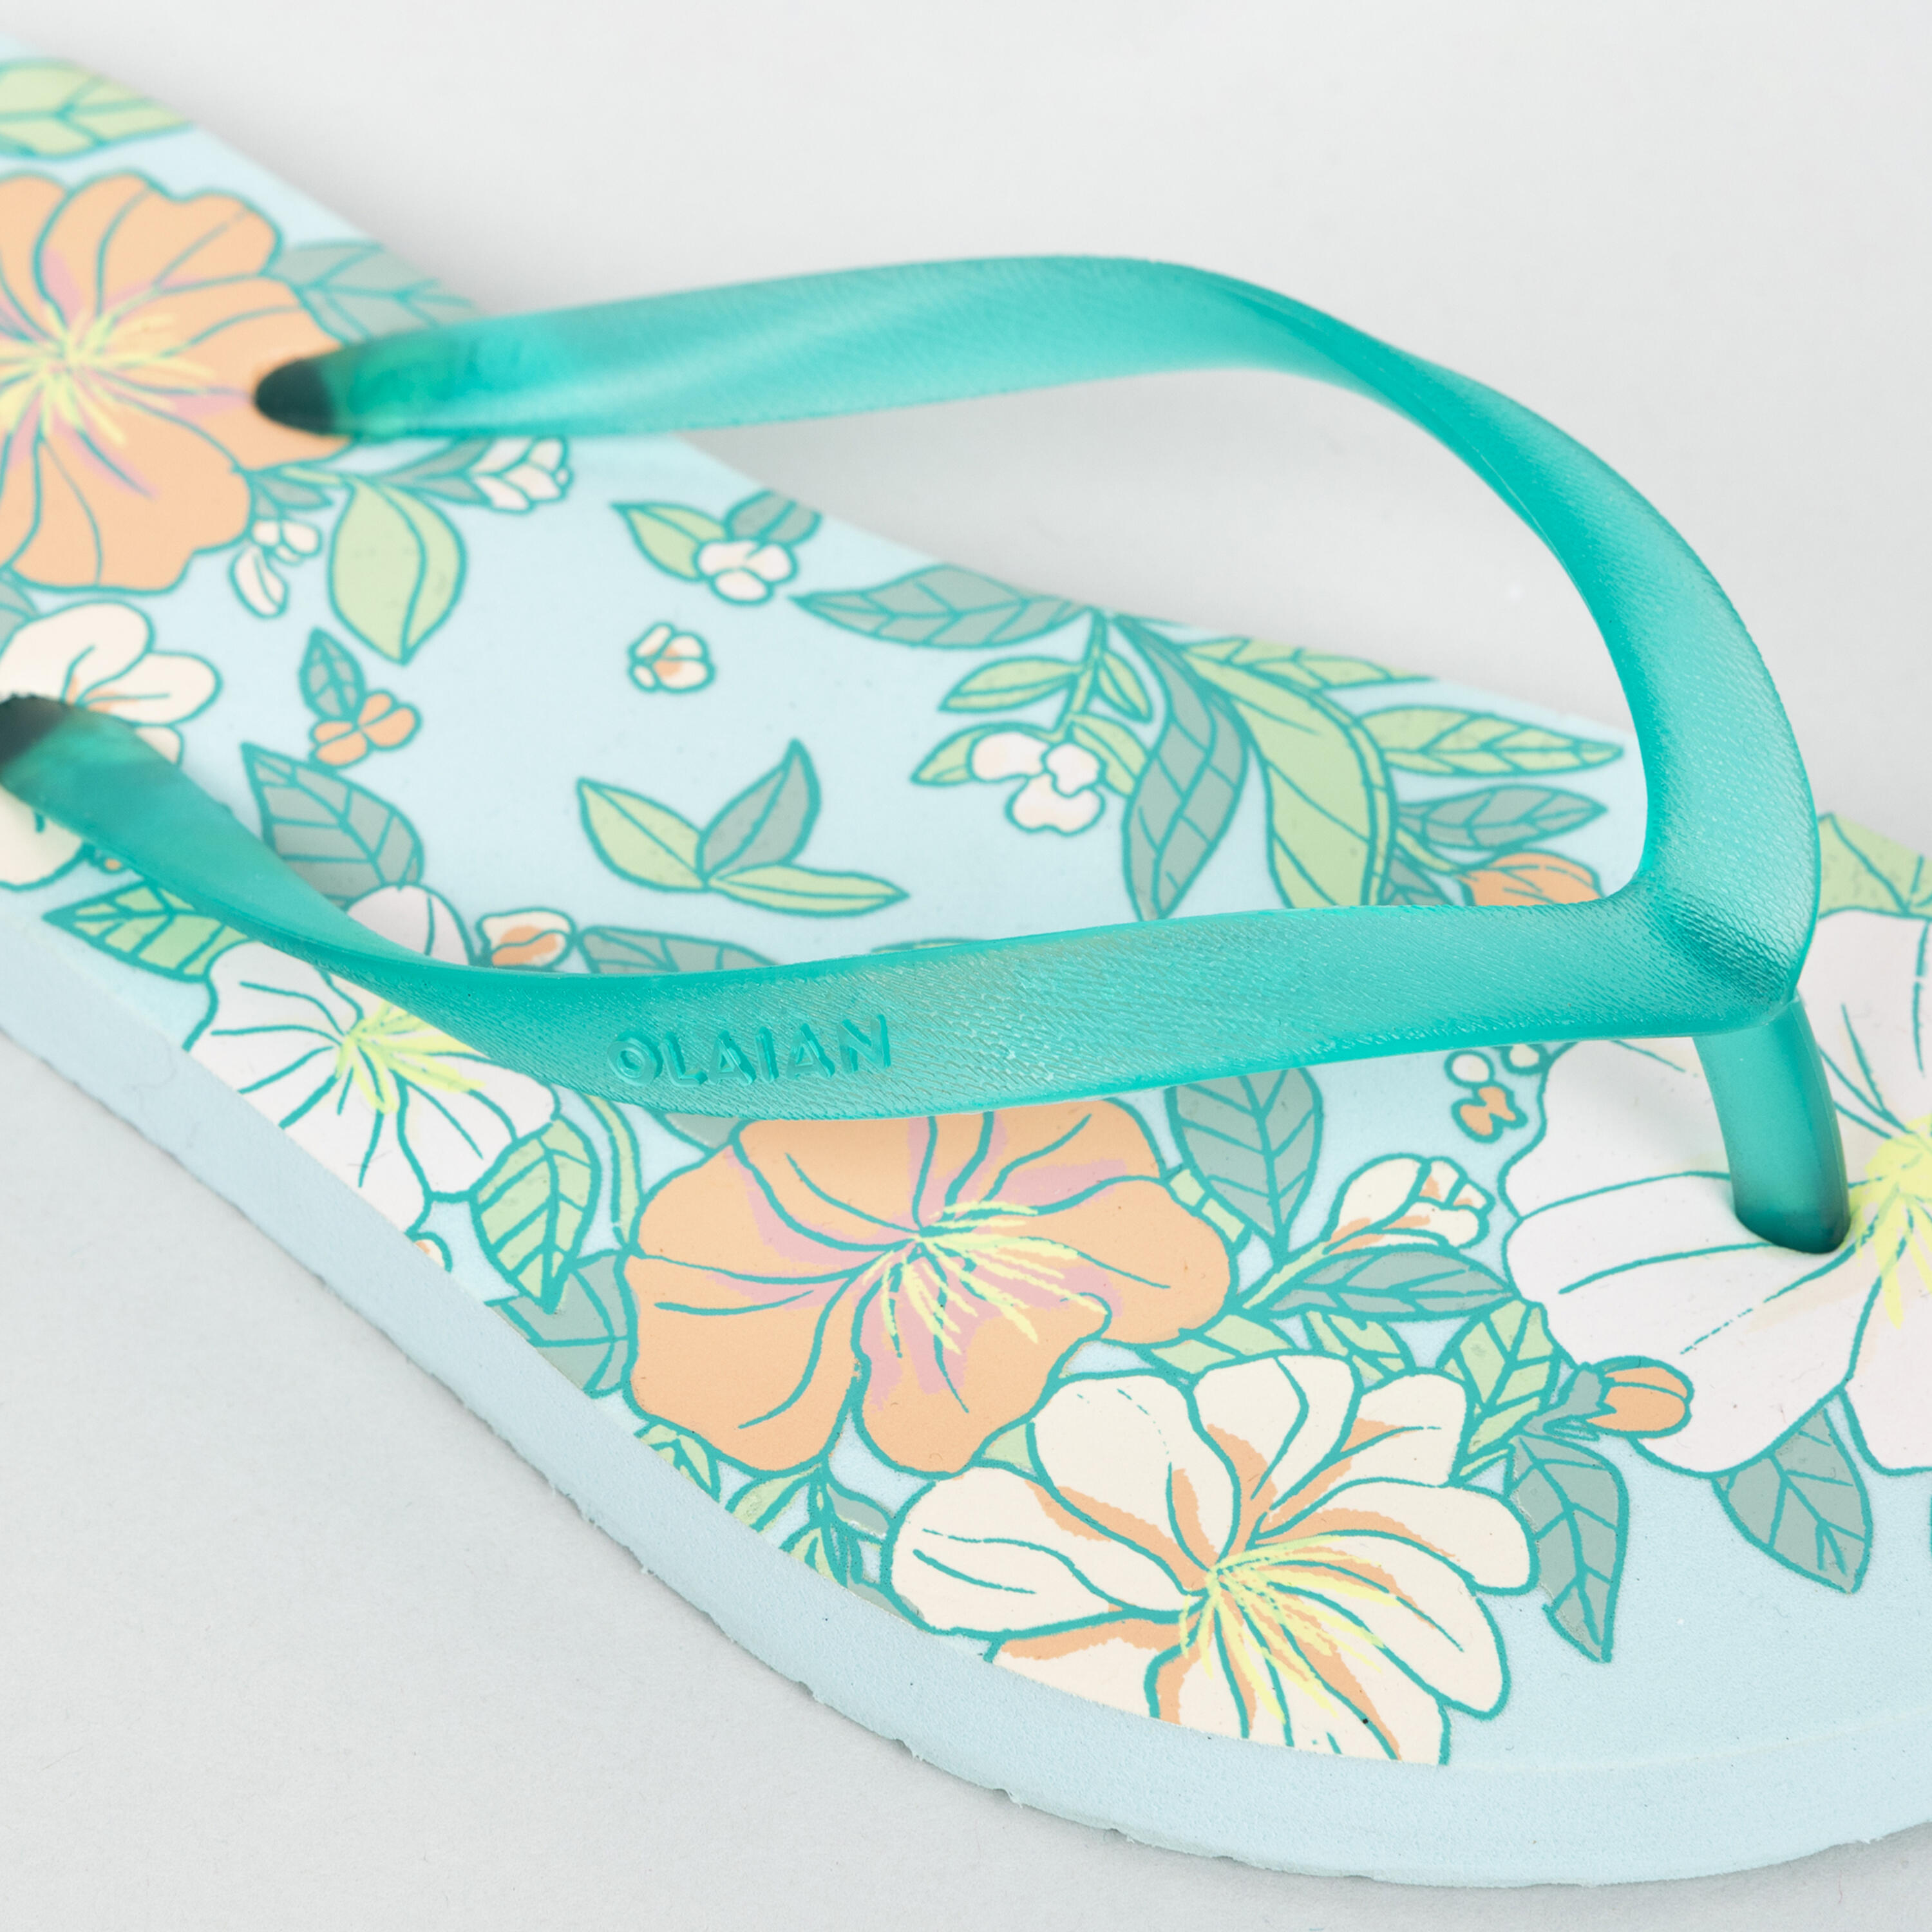 Grls' Flip-Flops - 120 Flower turquoise 5/5